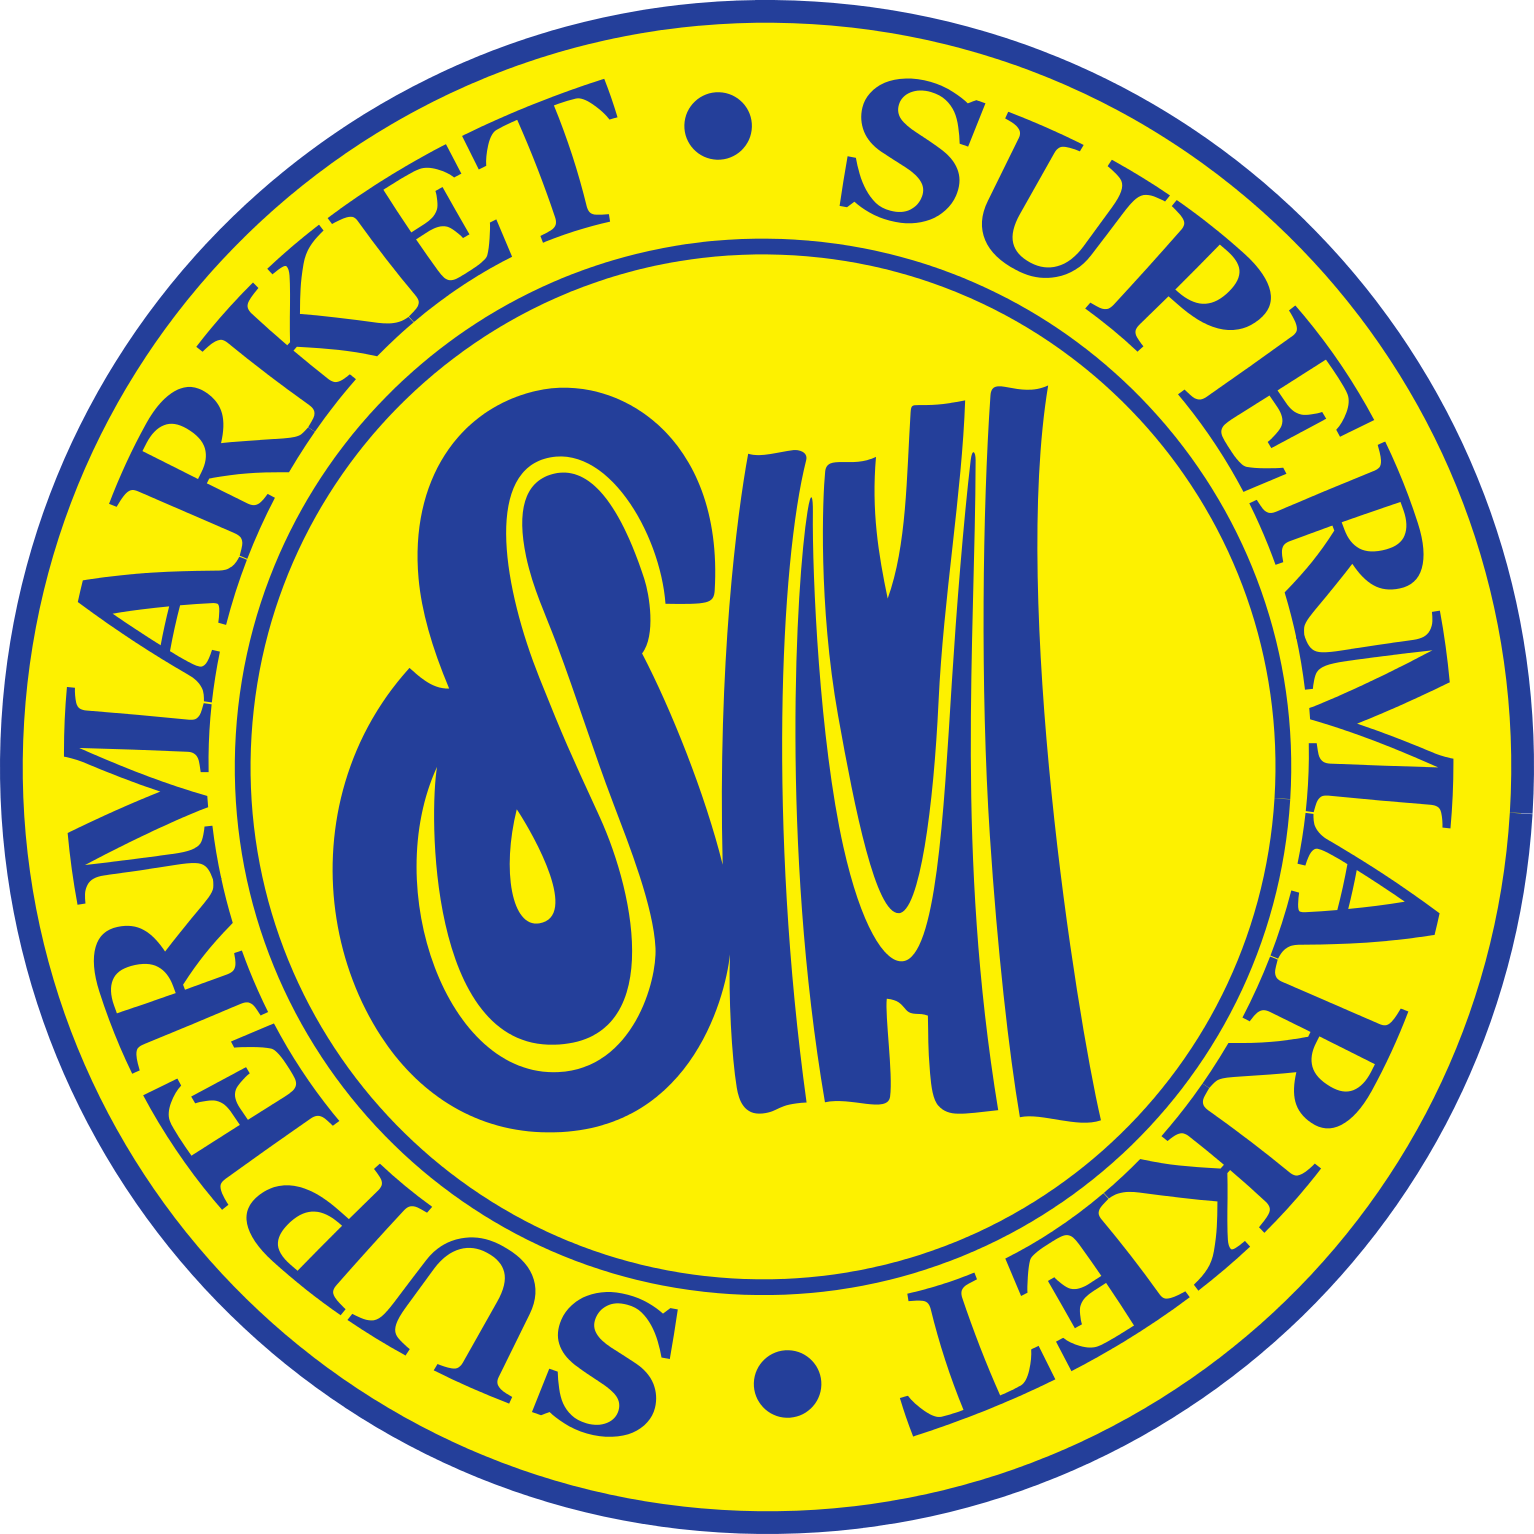 SM Supermarket Logo - SM Supermarket | Logopedia | FANDOM powered by Wikia